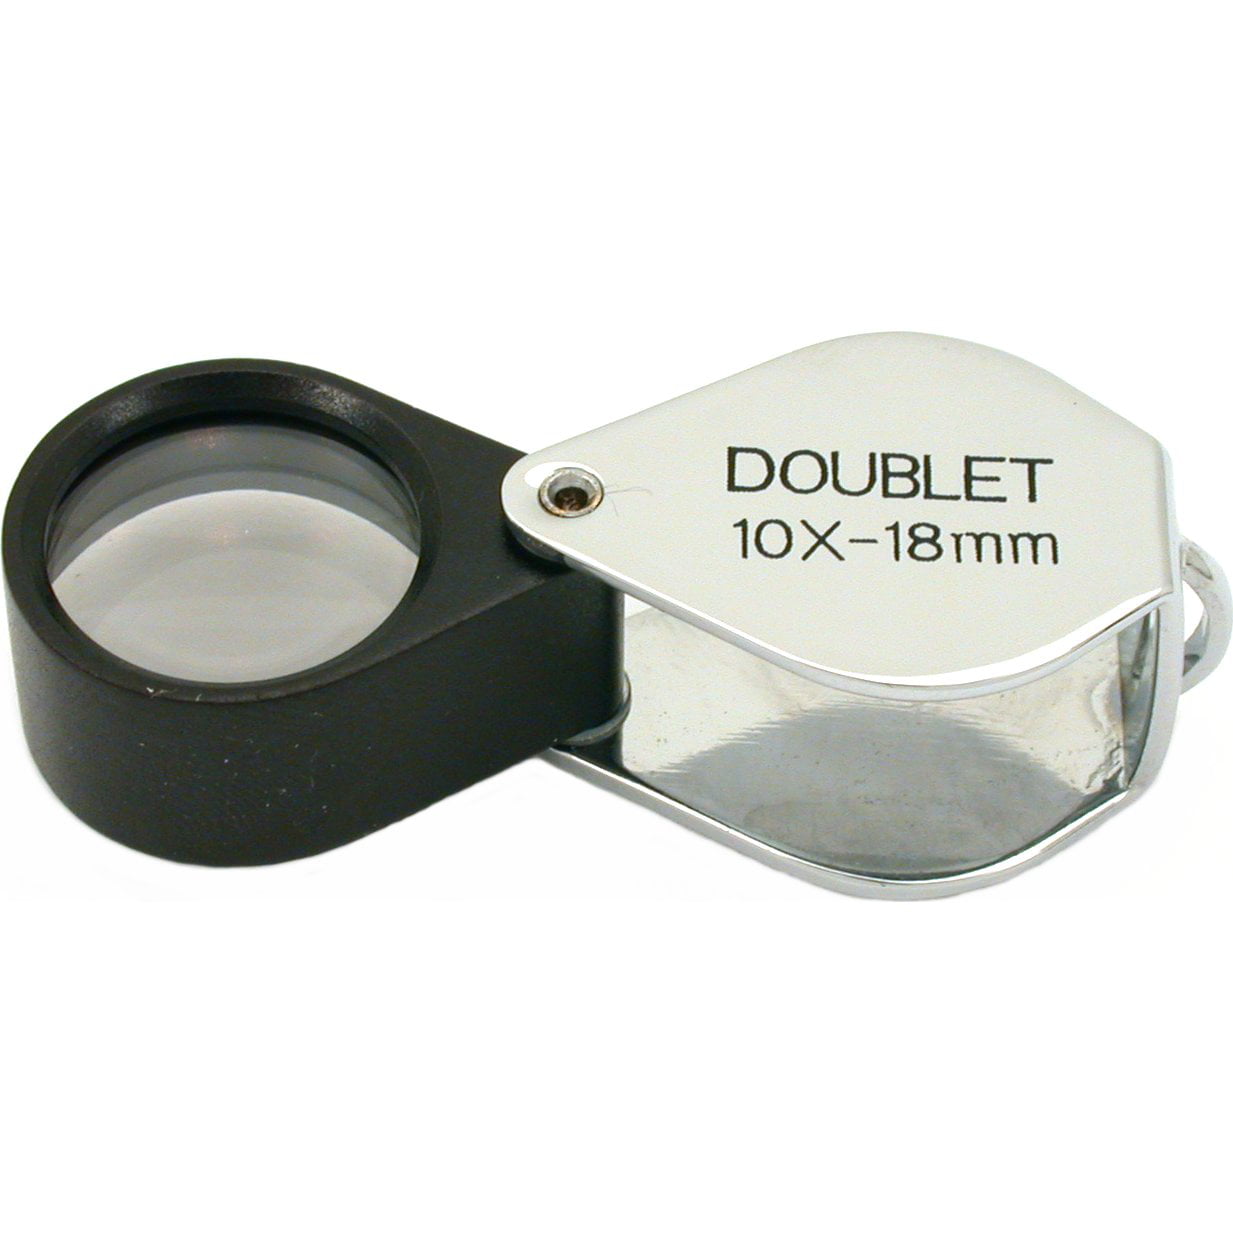 Triplet jeweler eye loupe magnifier 10X 18mm magnifying glass jewelry diamonR ^S 